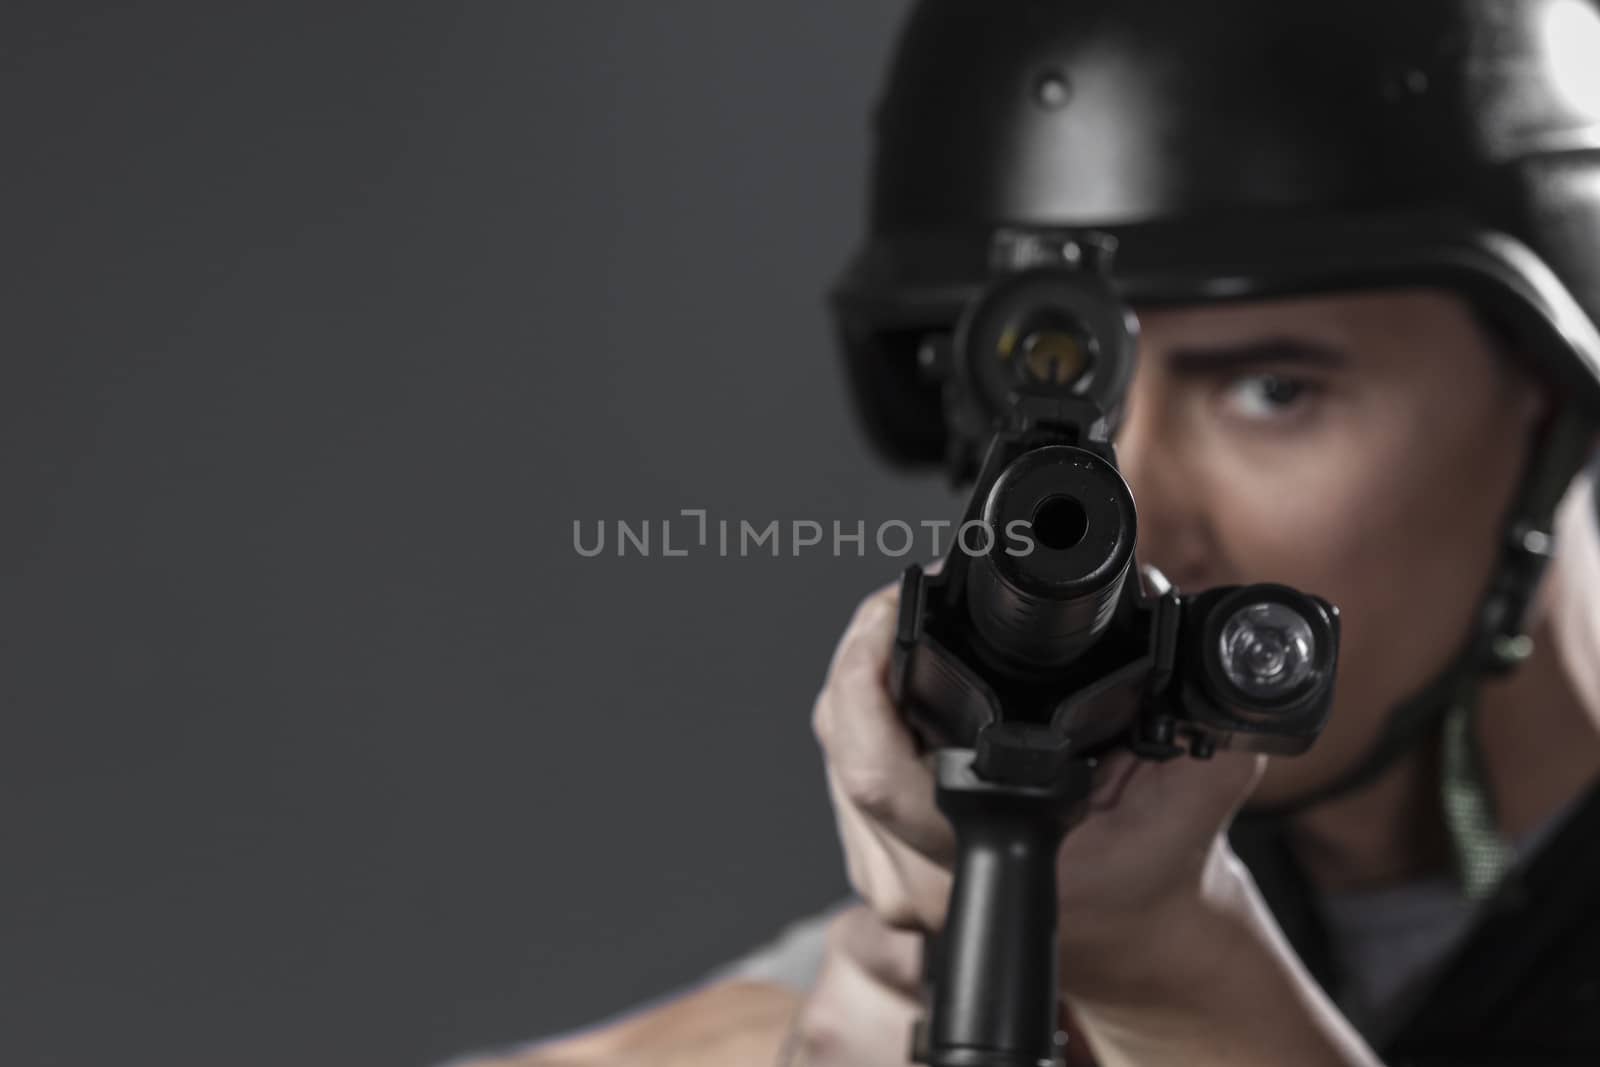 Gunfire, paintball sport player wearing protective helmet aiming pistol ,black armor and machine gun